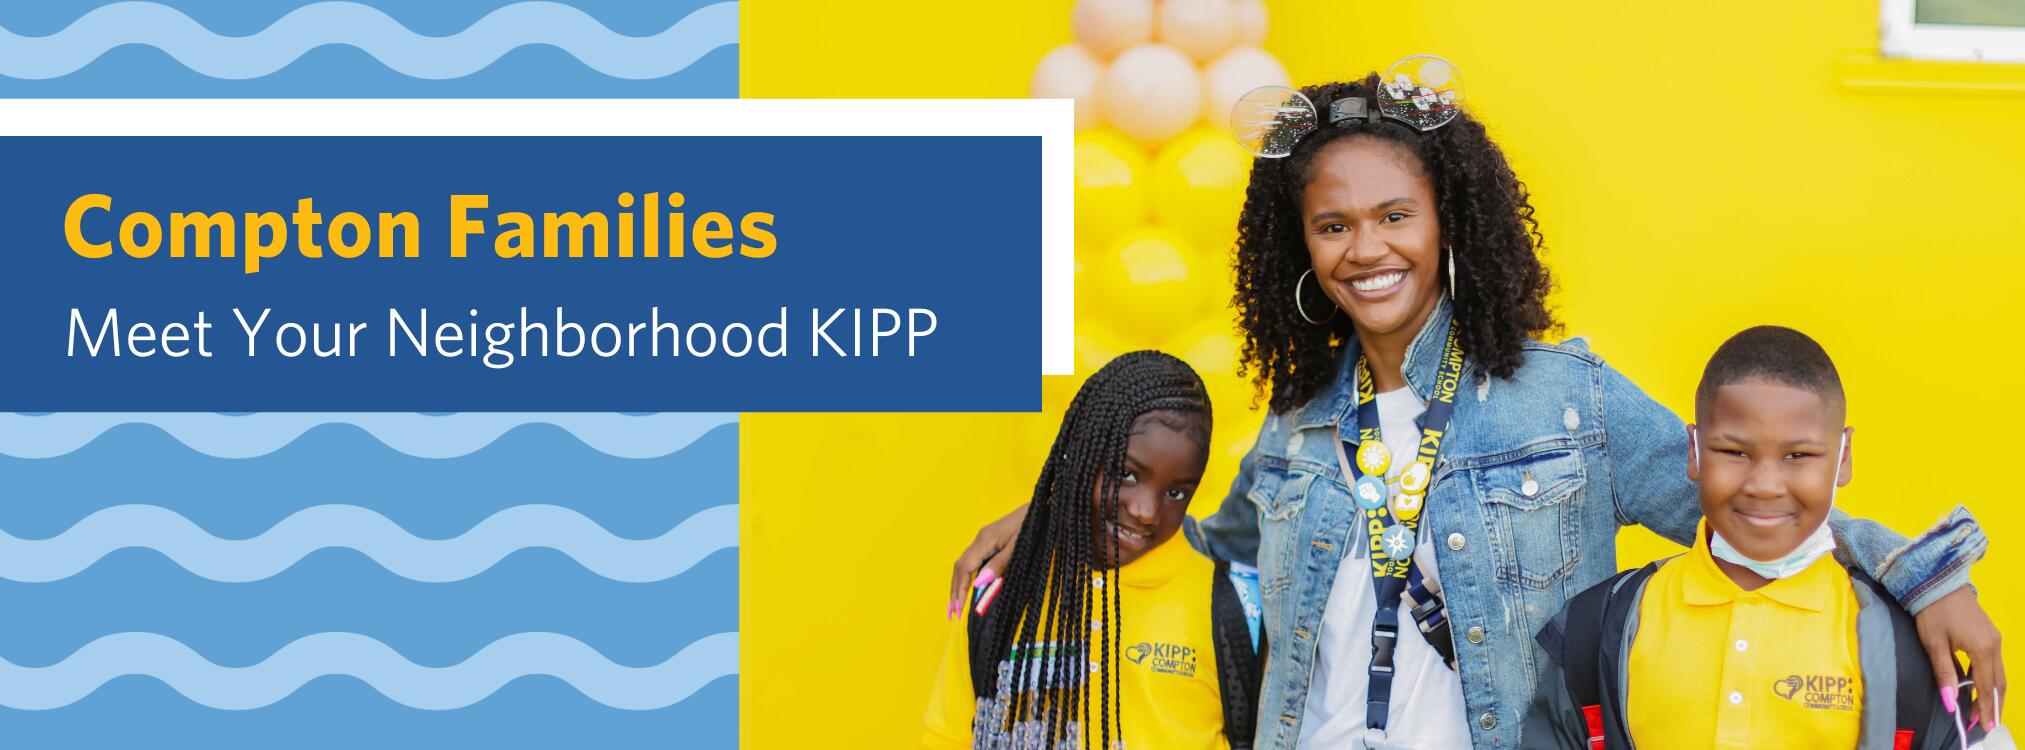 Compton Families: Meet Your Neighborhood KIPP